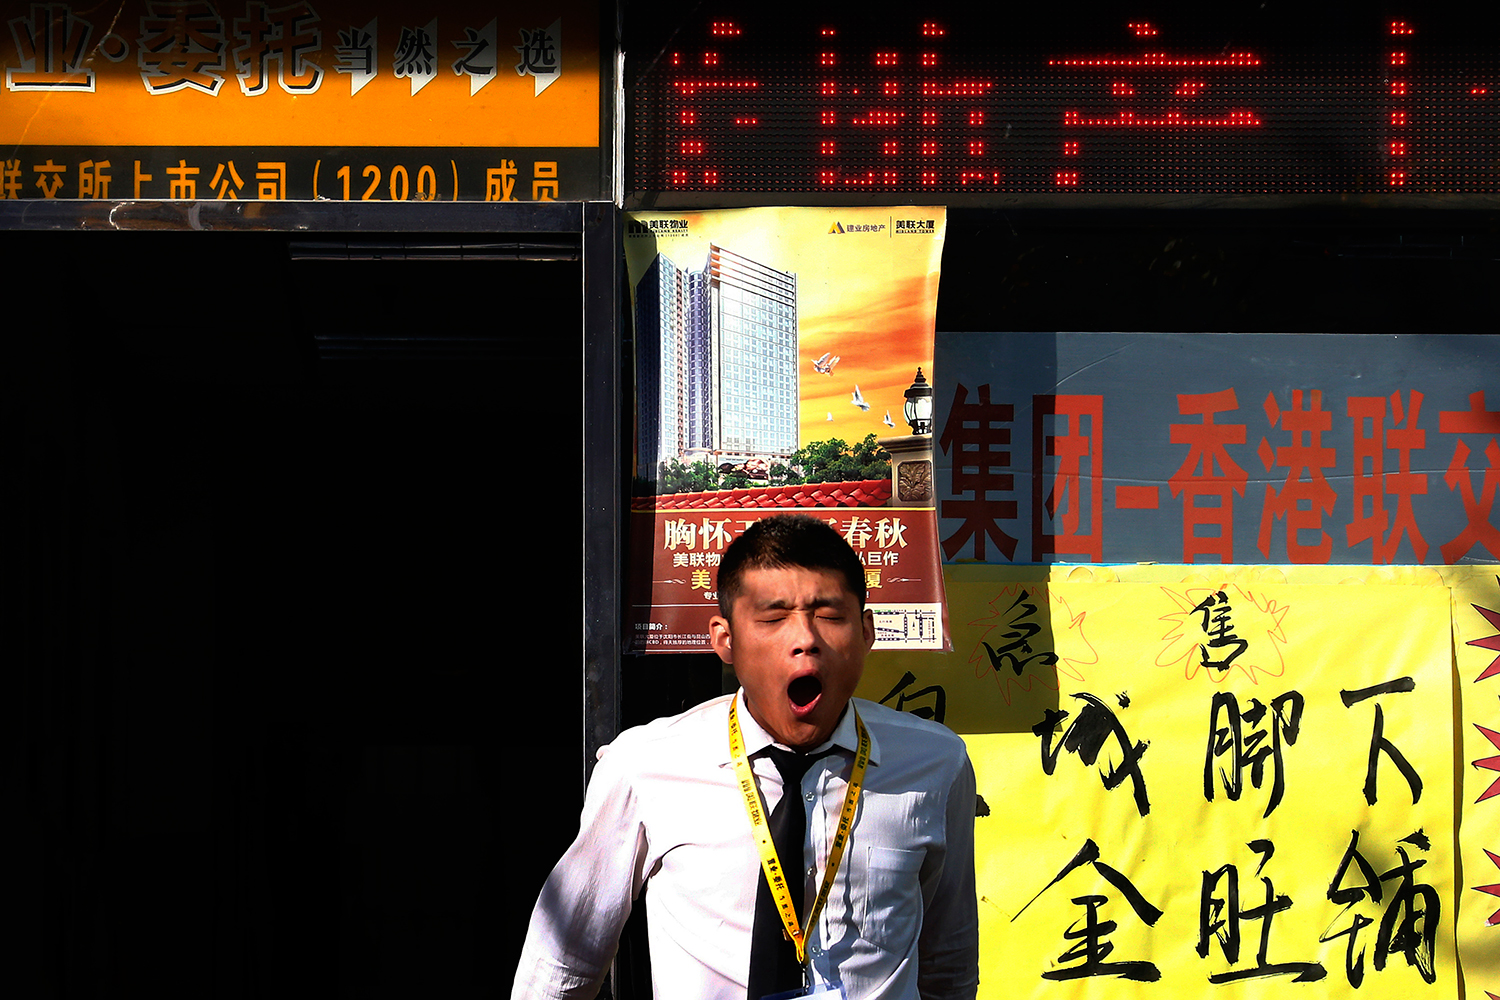 China castiga la "vagancia" de 249 funcionarios